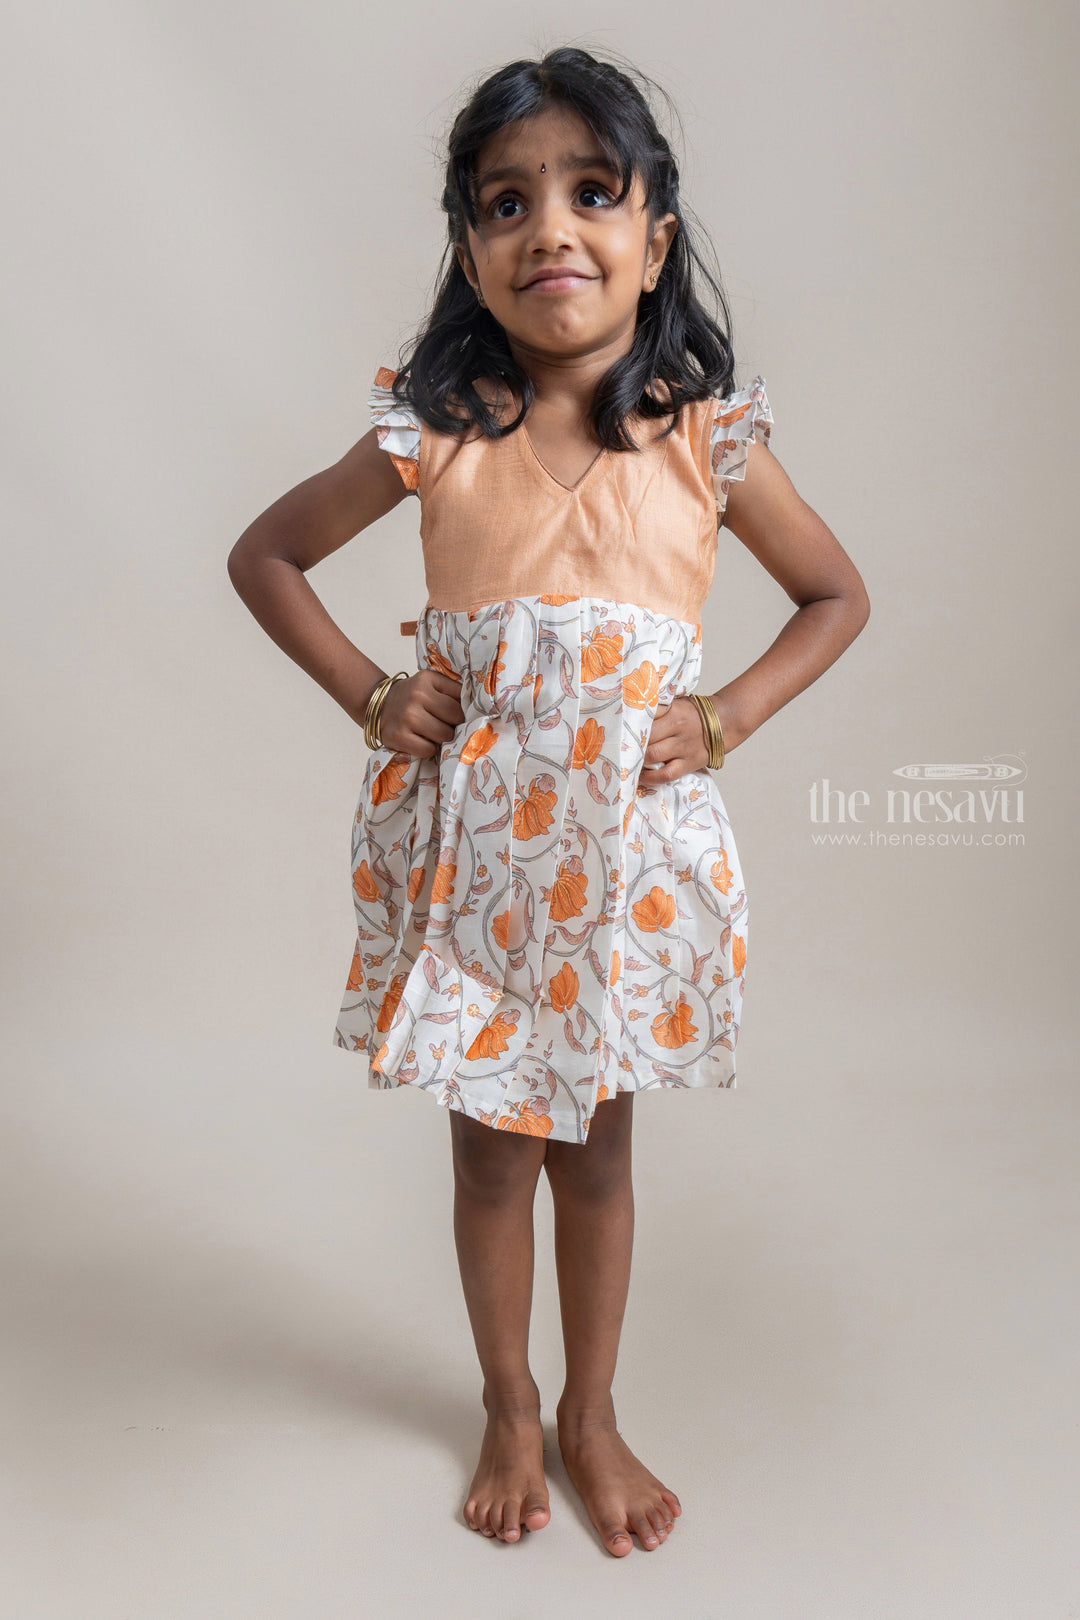 The Nesavu Frocks & Dresses Adorable Muted Orange And White Floral Printed Pleated Cotton Frock For Girls psr silks Nesavu 12 (3M) / Orange GFC750C